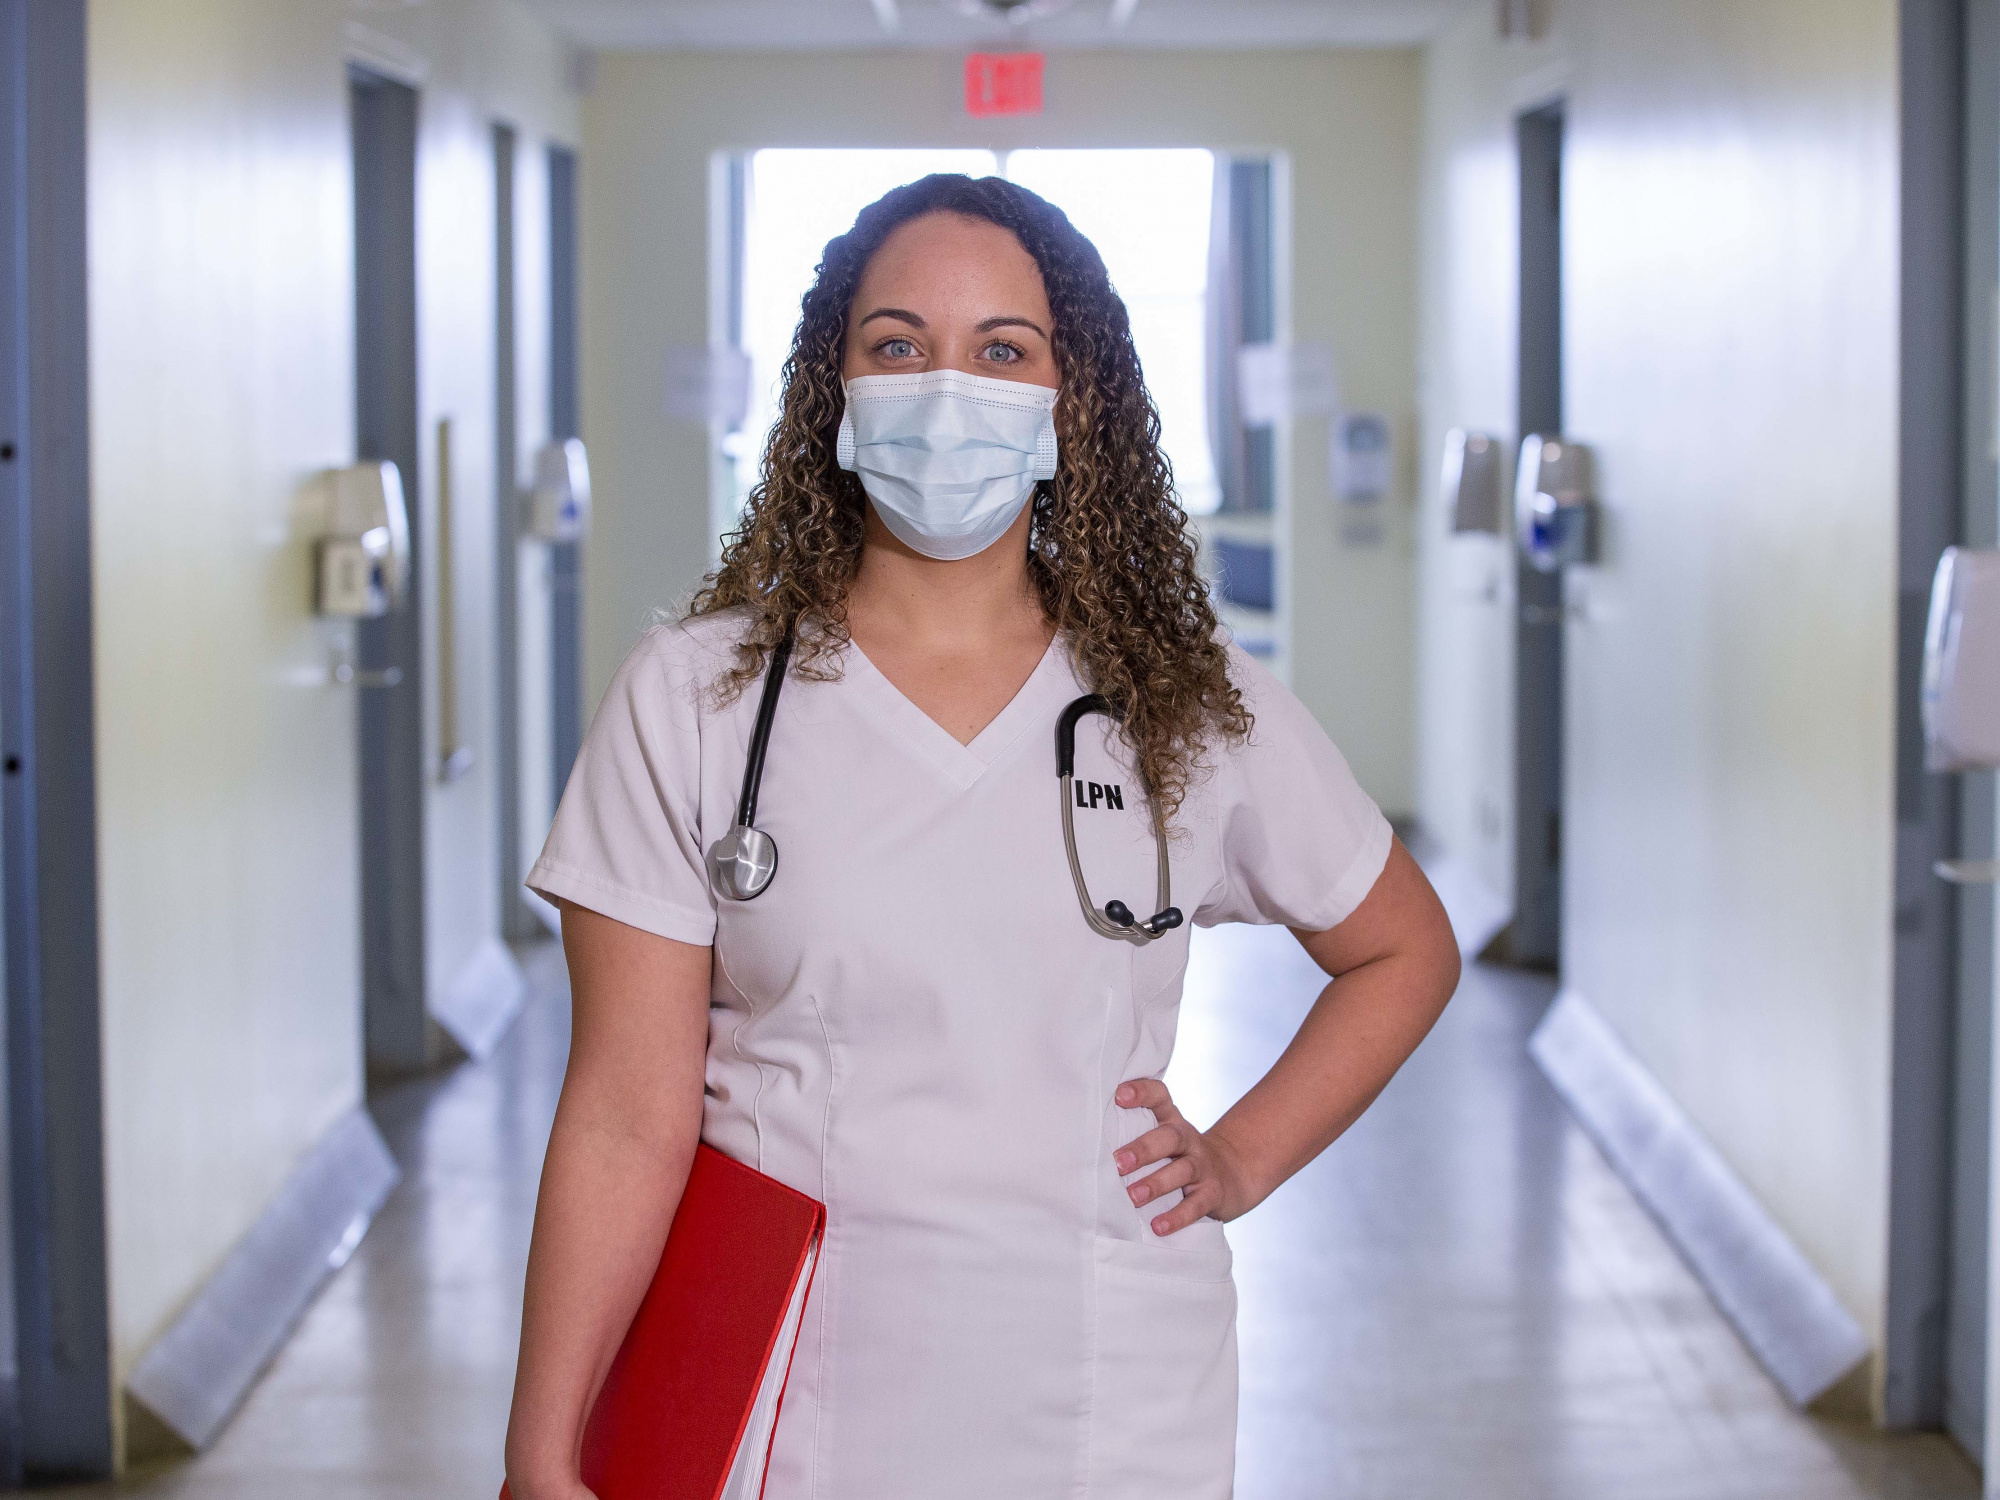 A licensed practical nurse at work in a Nova Scotia hospital